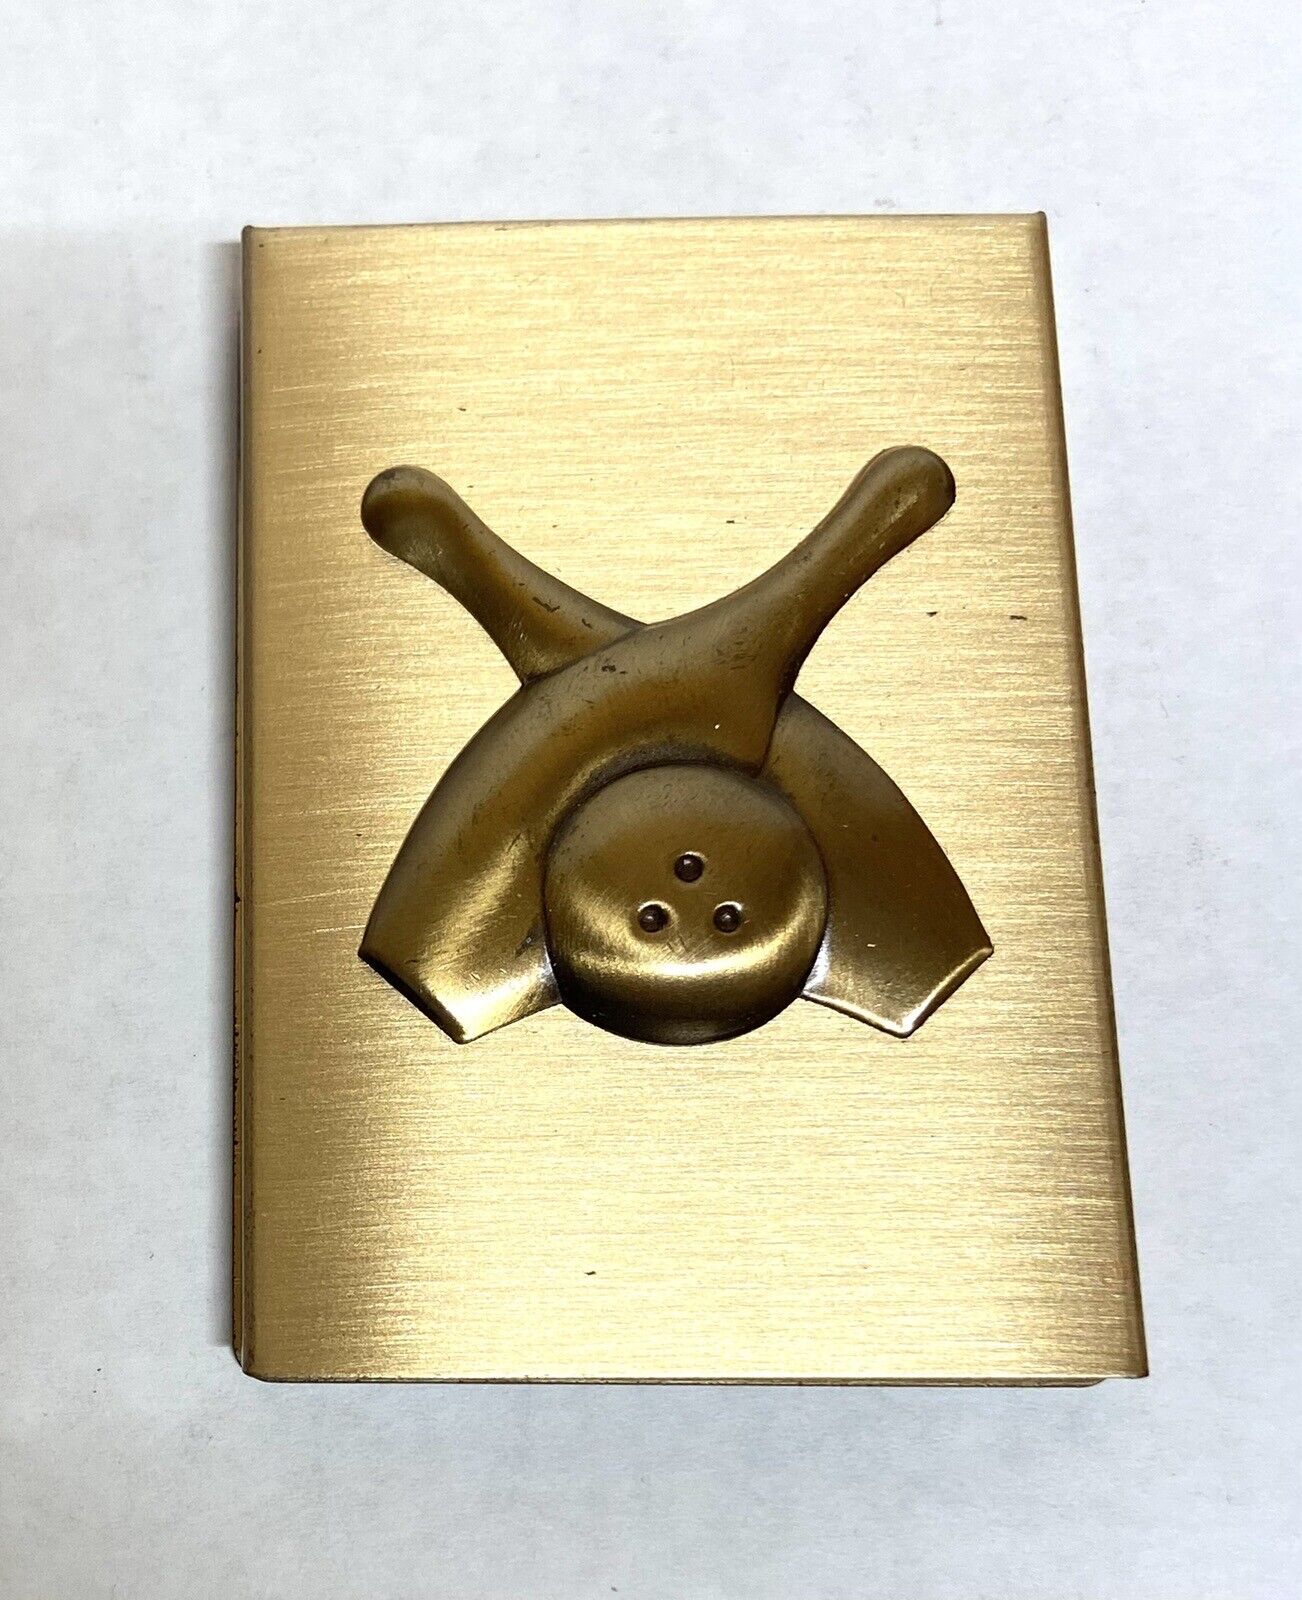 Vintage Metal Note Pad Holder -Bowling design attached- brushed brass finish NOS